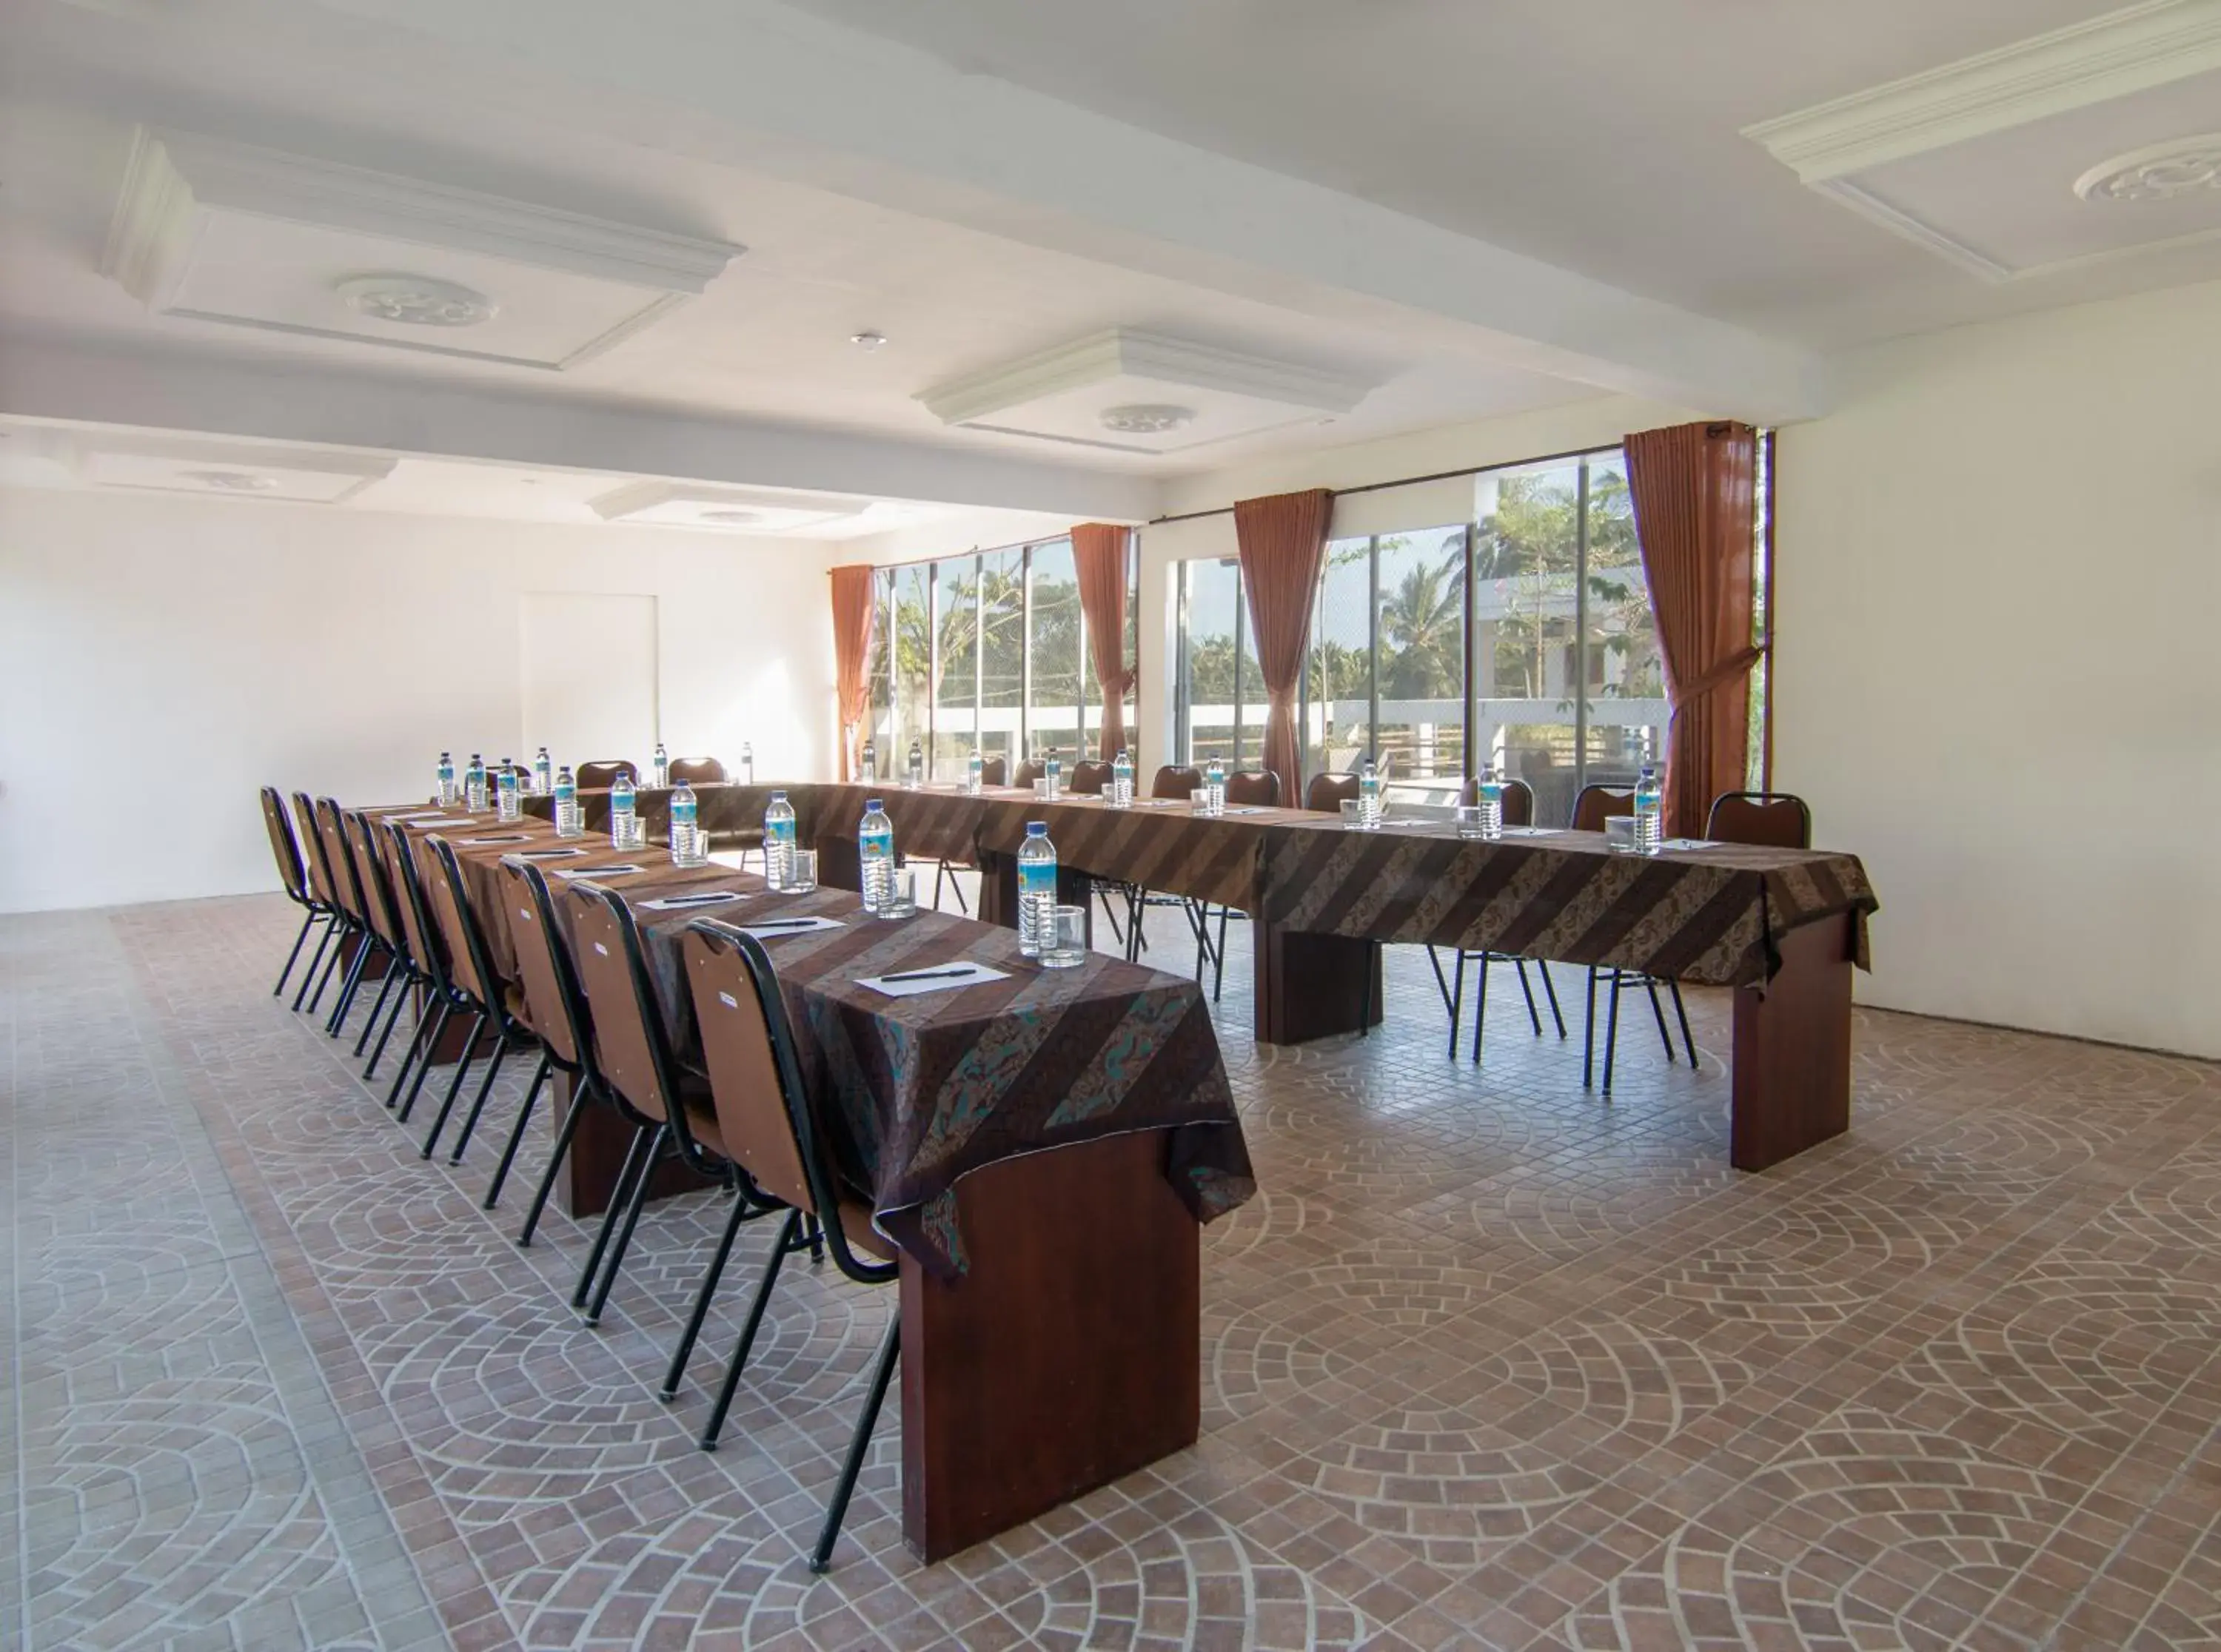 Meeting/conference room in Diva Lombok Resort